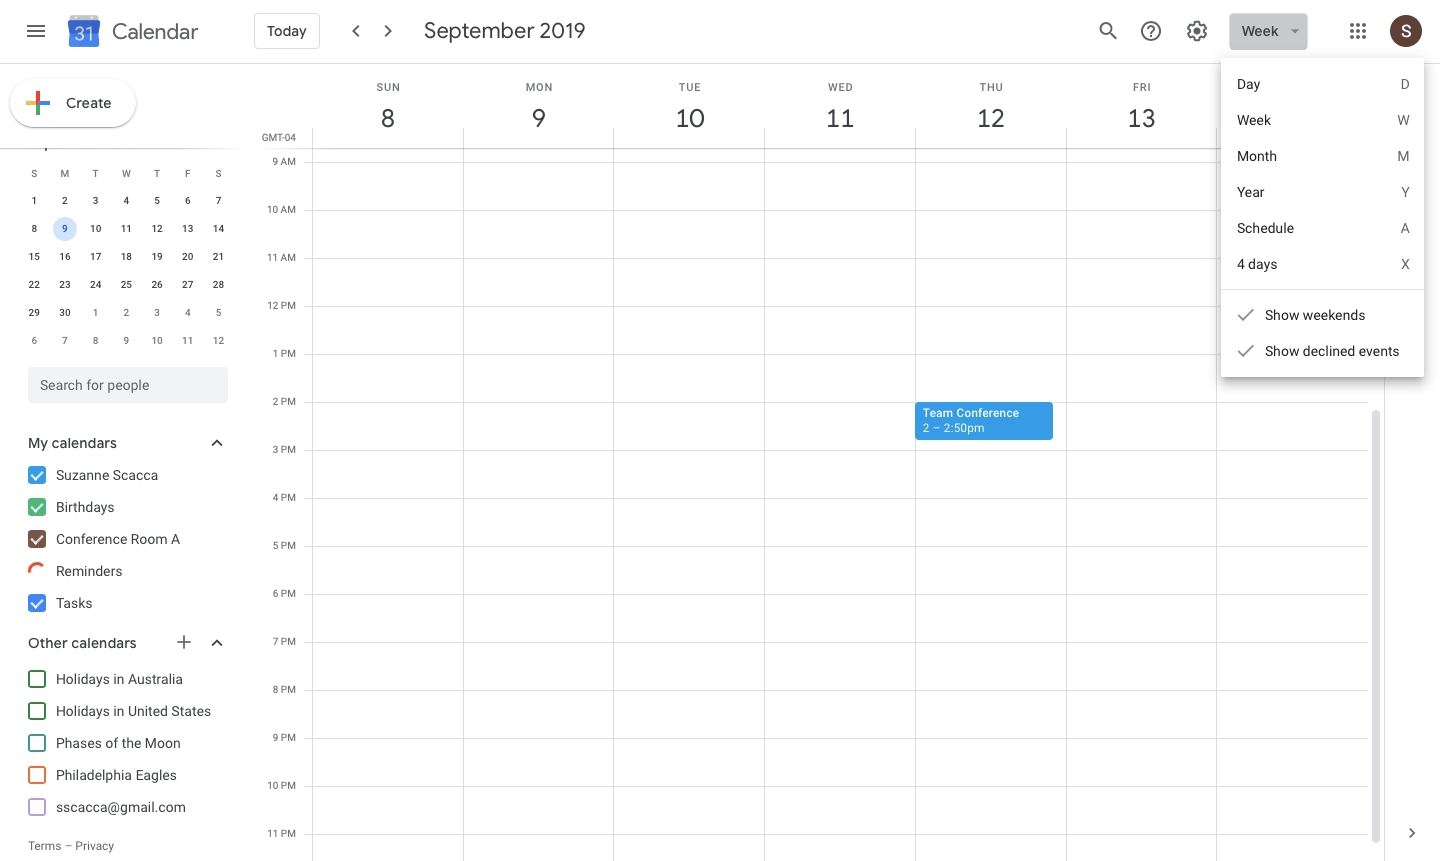 33 google calendar hacks to boost your productivity | copper